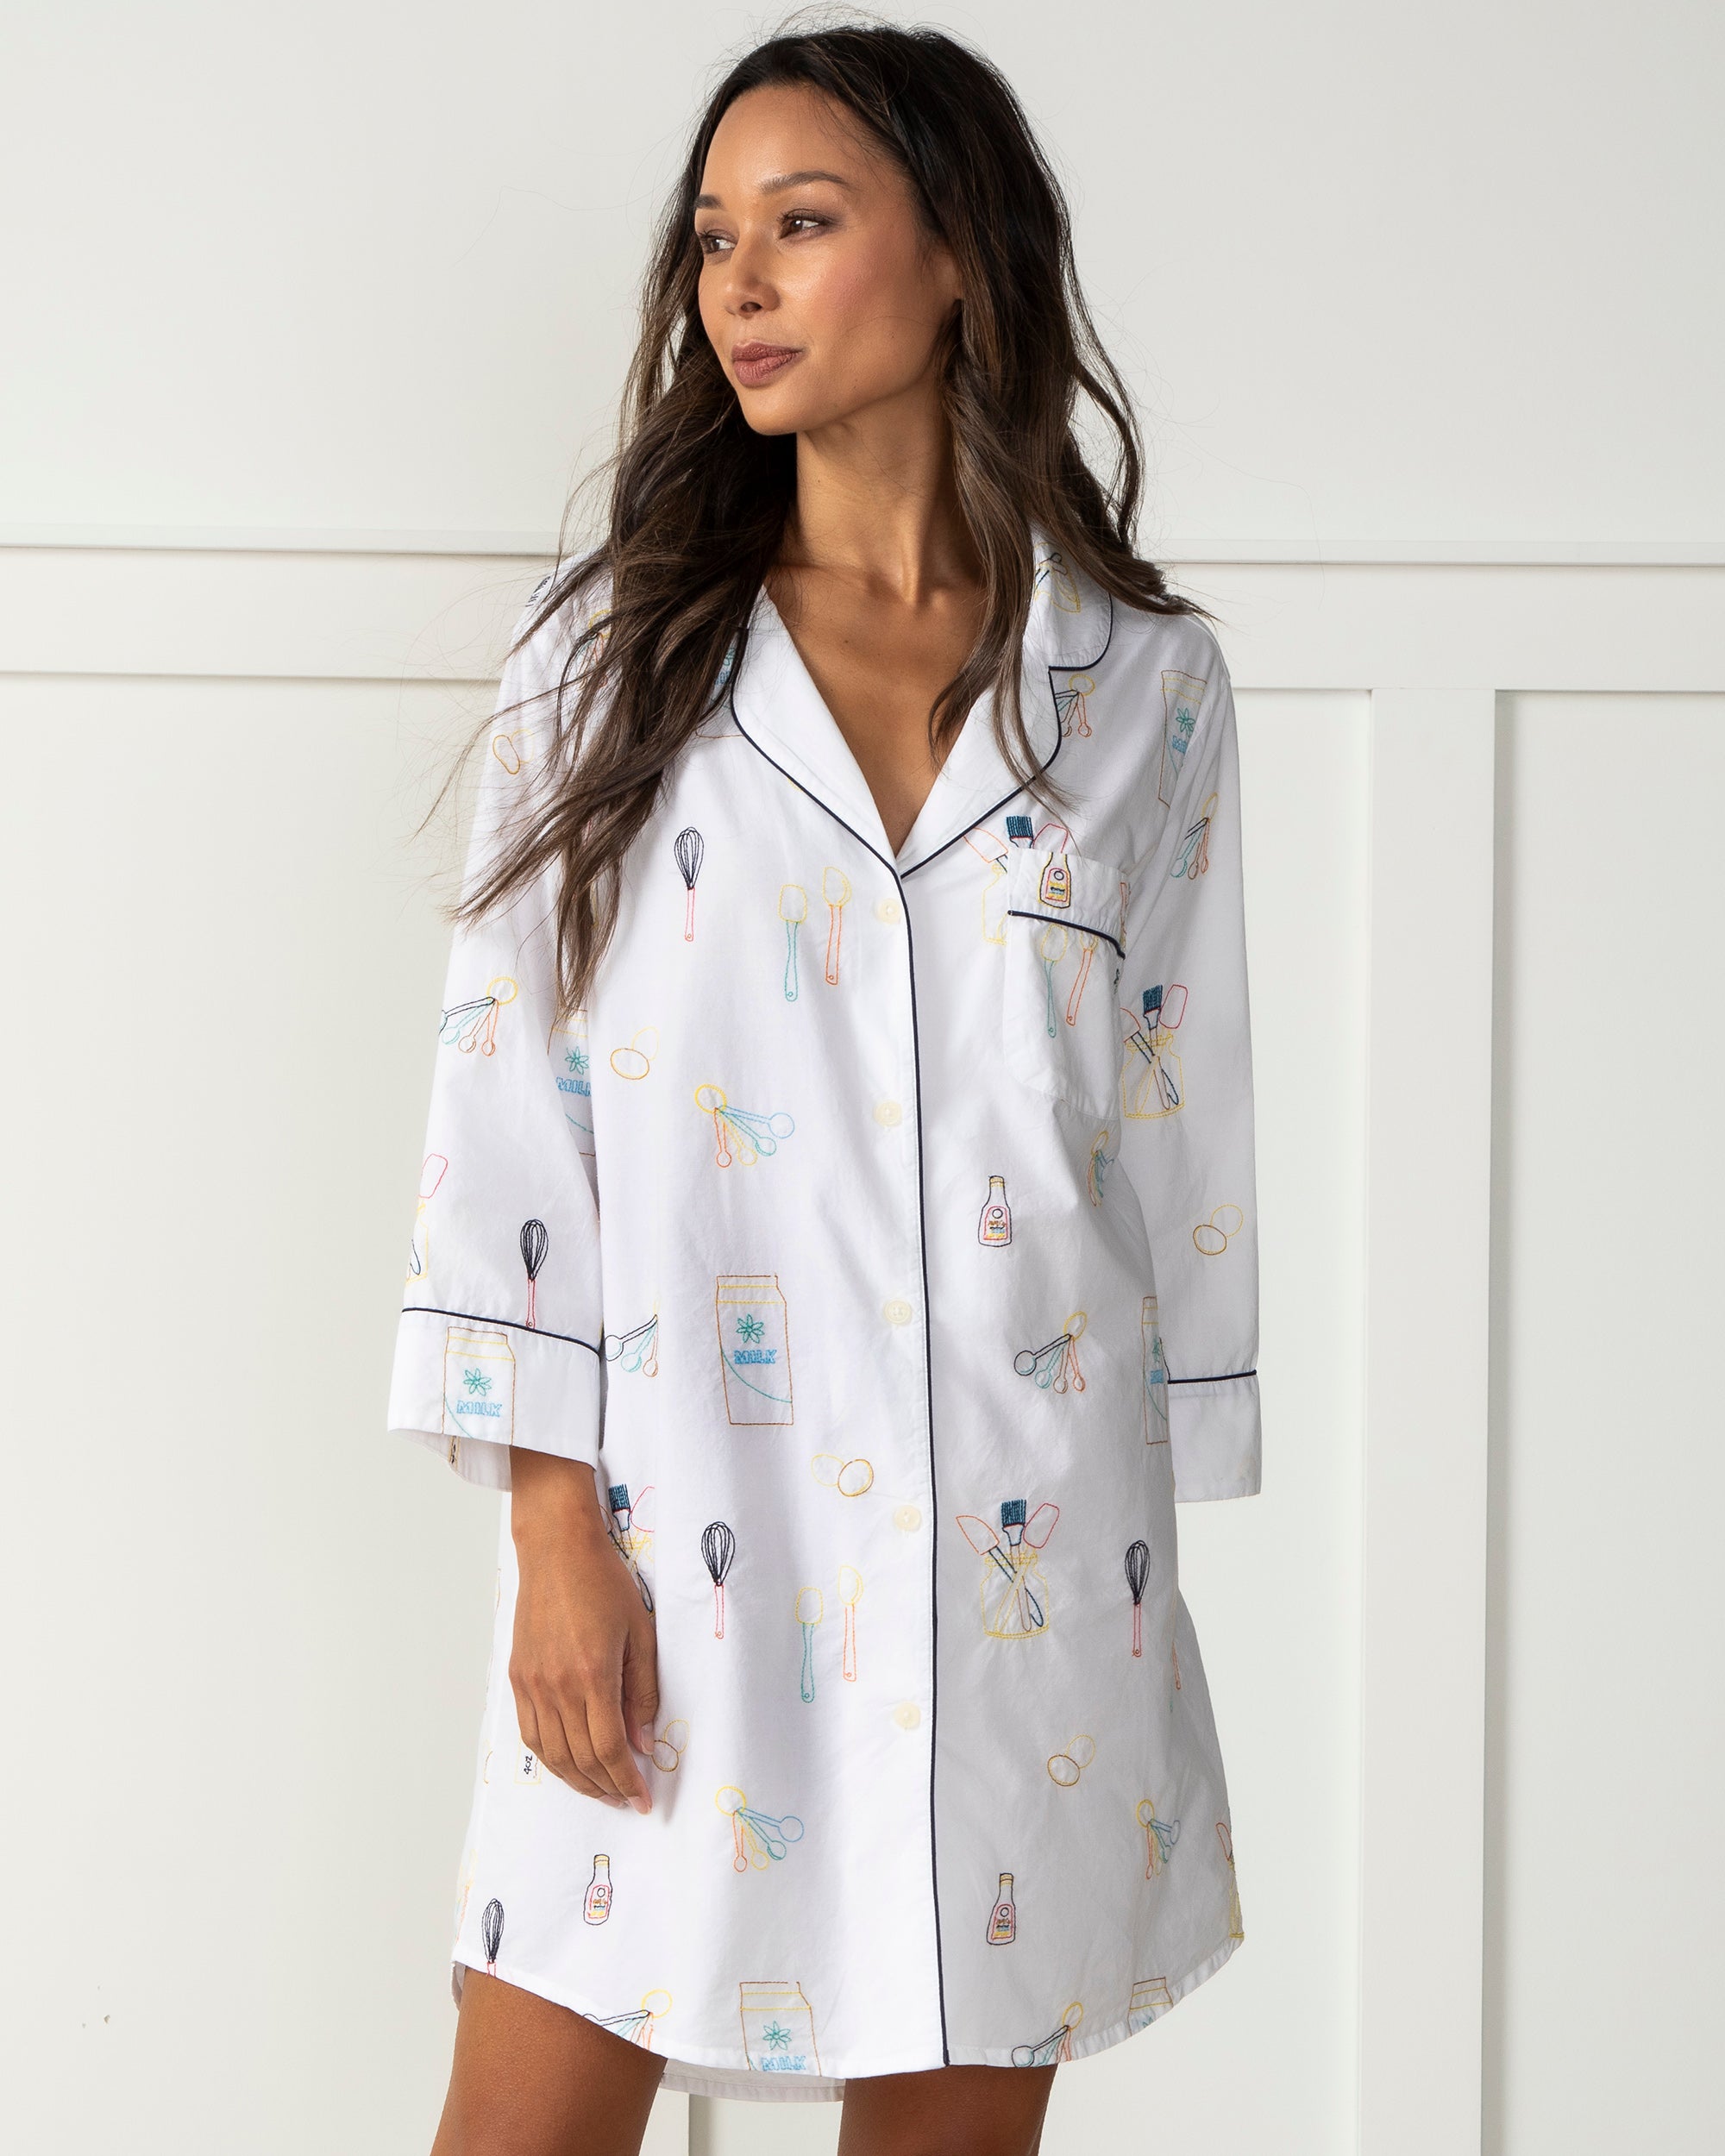 Home Chef - Women's Cotton Sleep Shirt - Icing